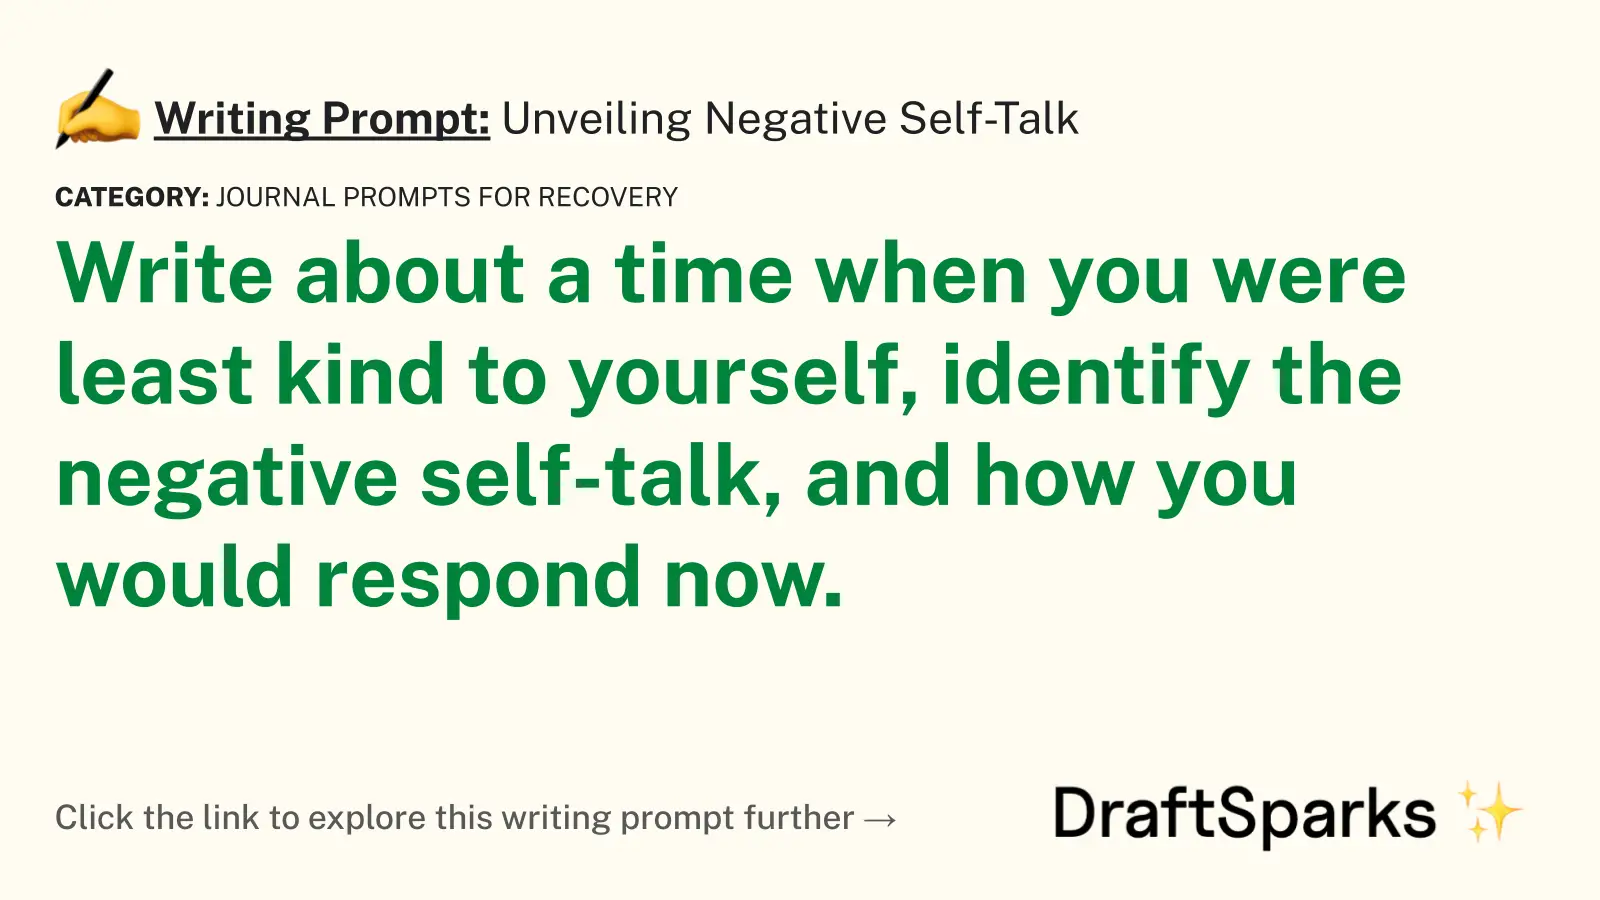 Unveiling Negative Self-Talk